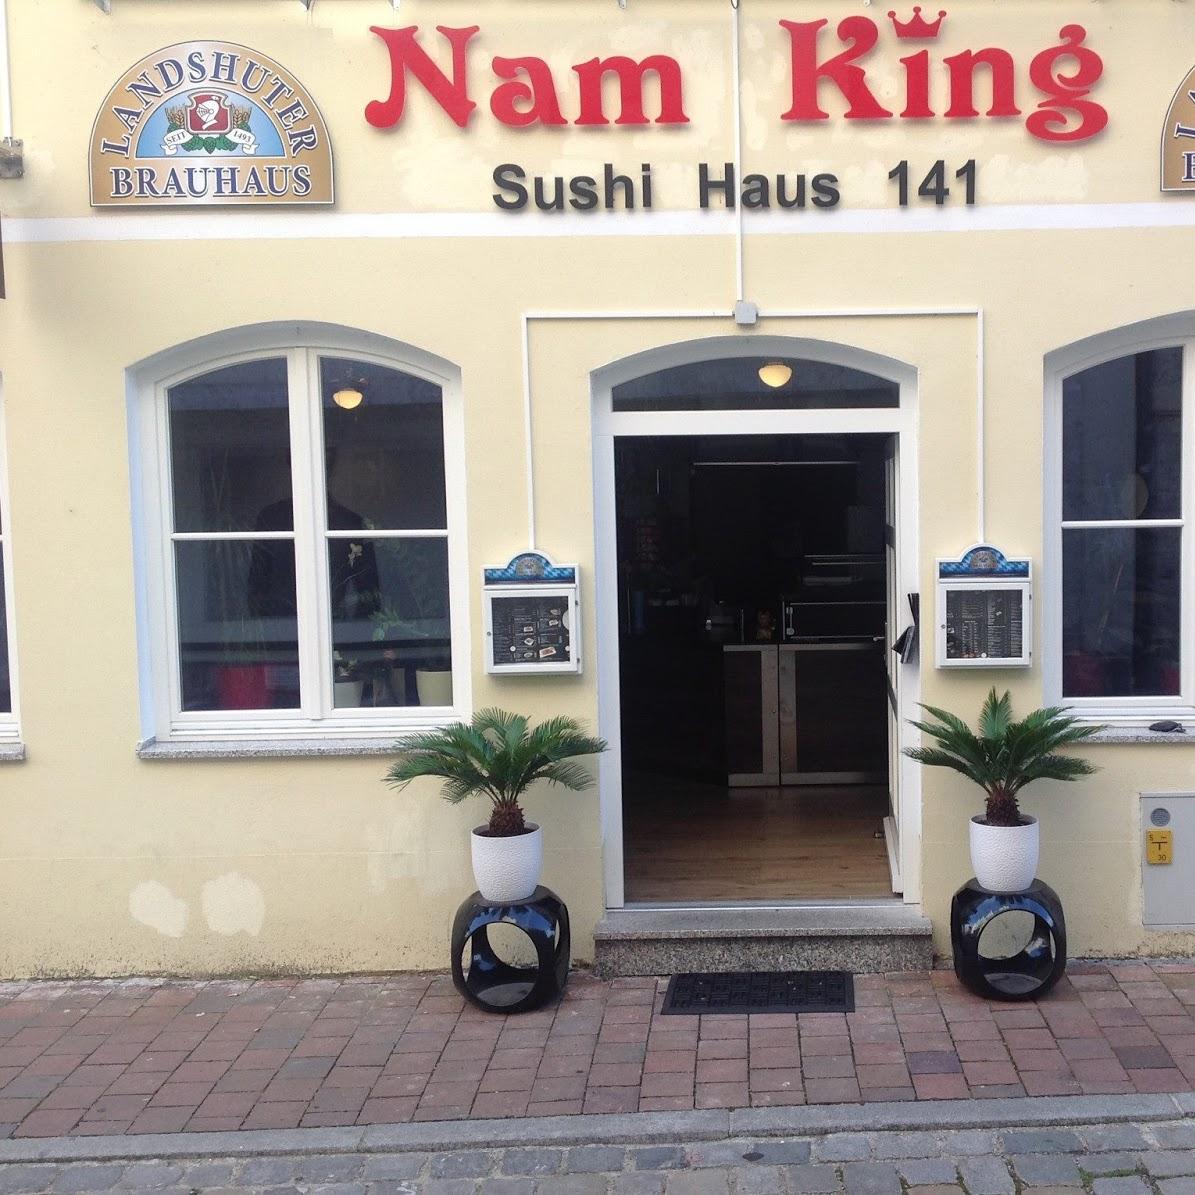 Restaurant "Nam King Sushi Haus 141" in  Landshut